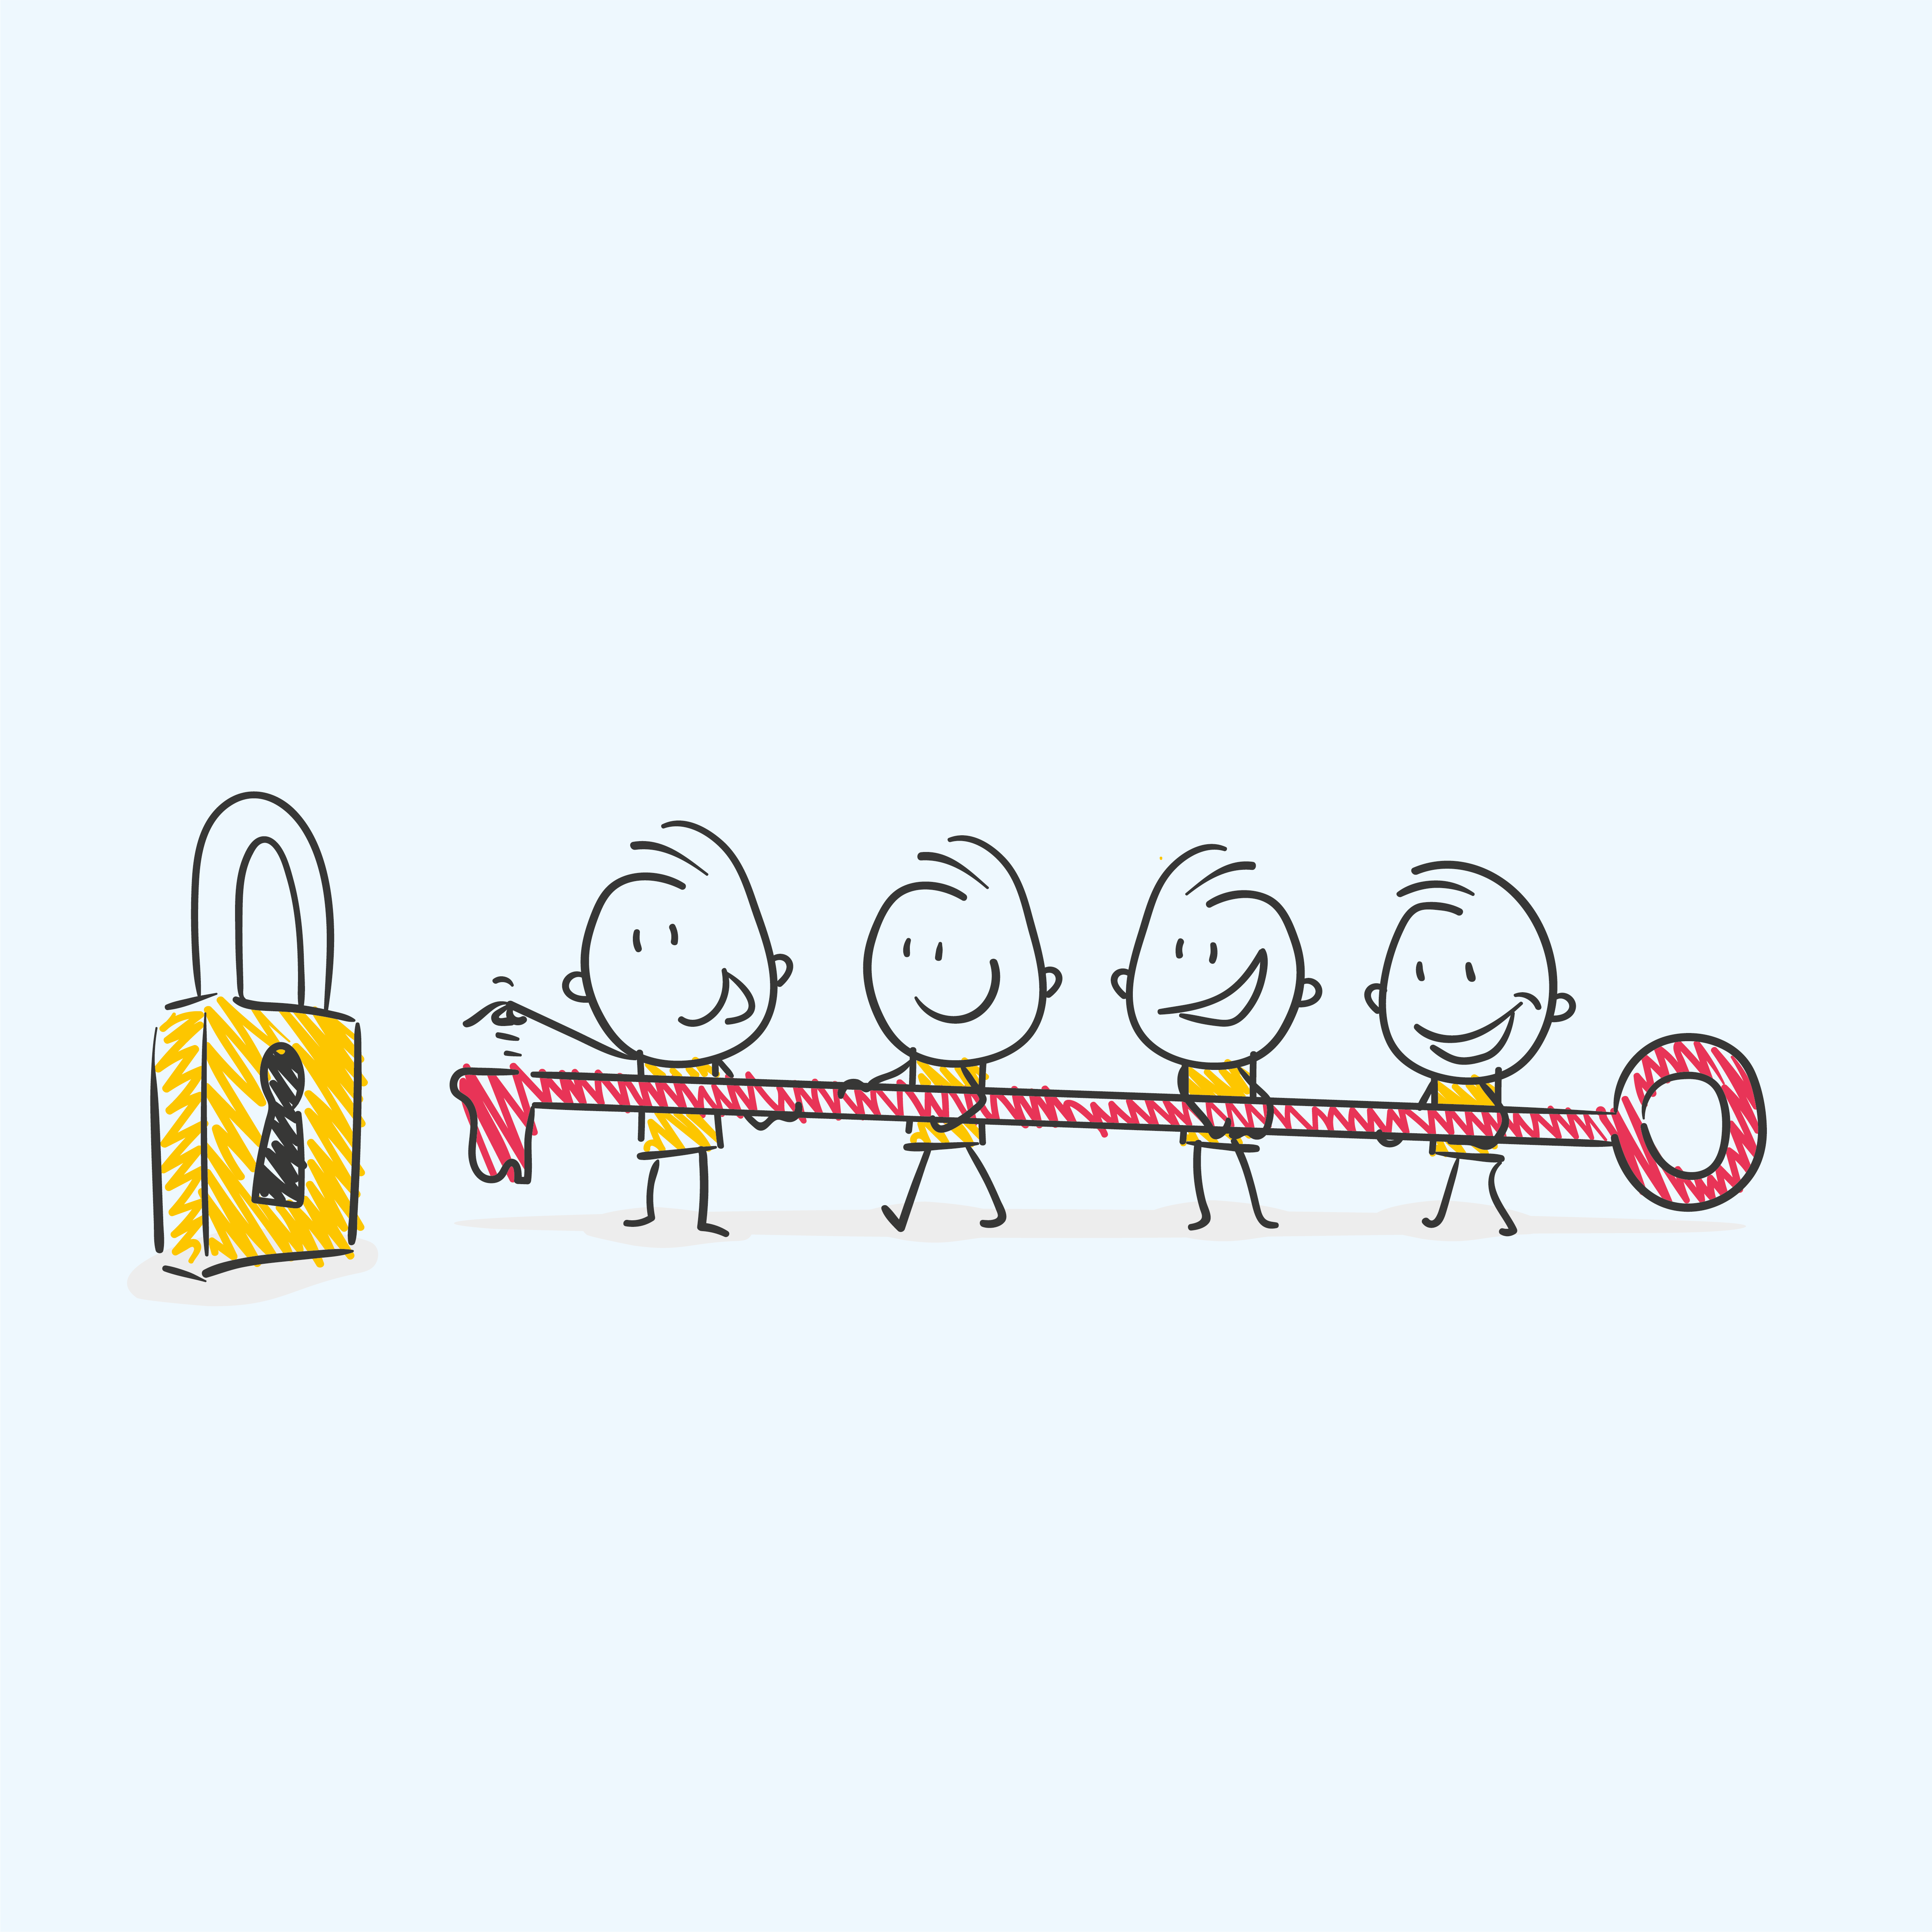 Quatre personnages transportent une grande clé vers un grand cadenas